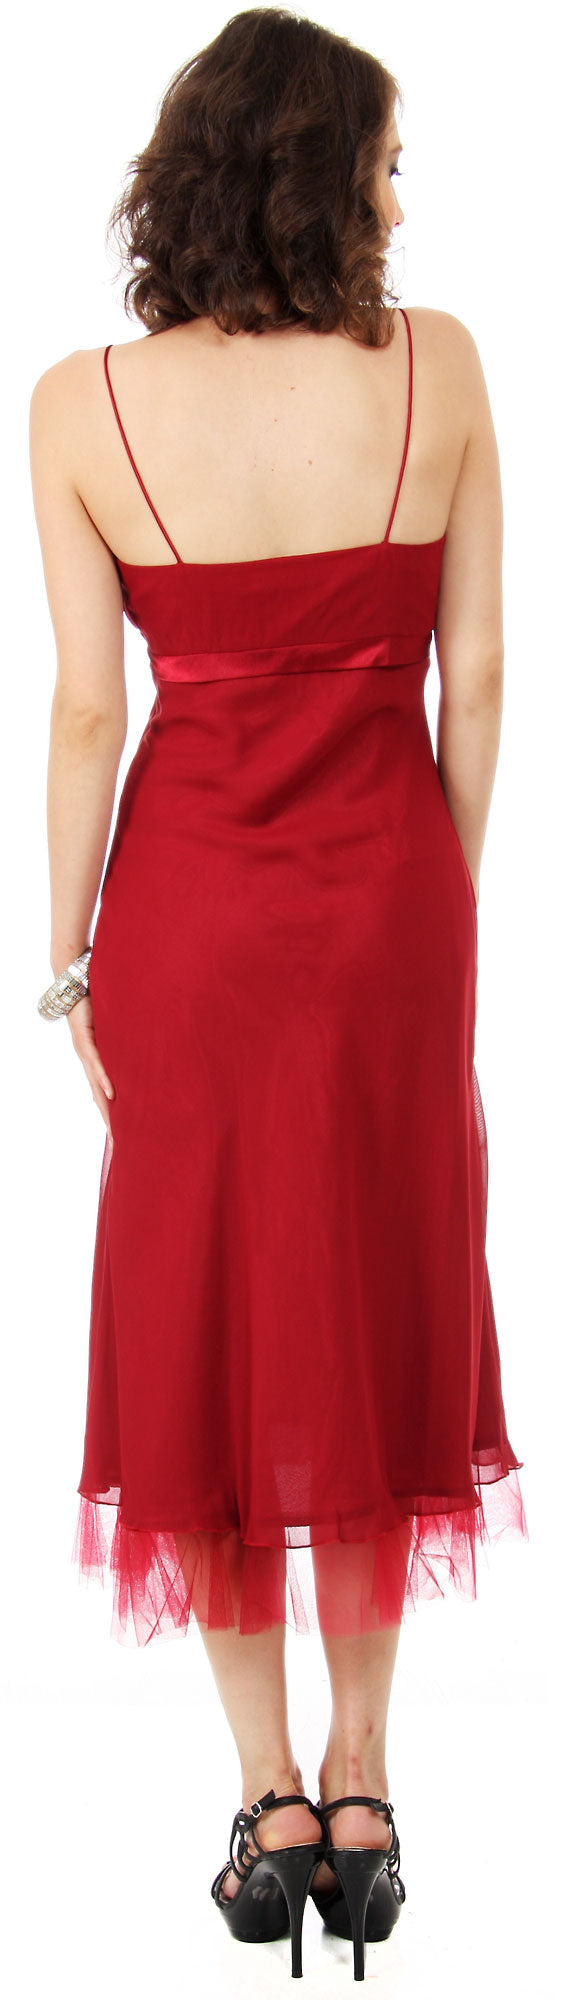 Back image of Spaghetti Straps Satin Bow Tea Length Cocktail Party Dress